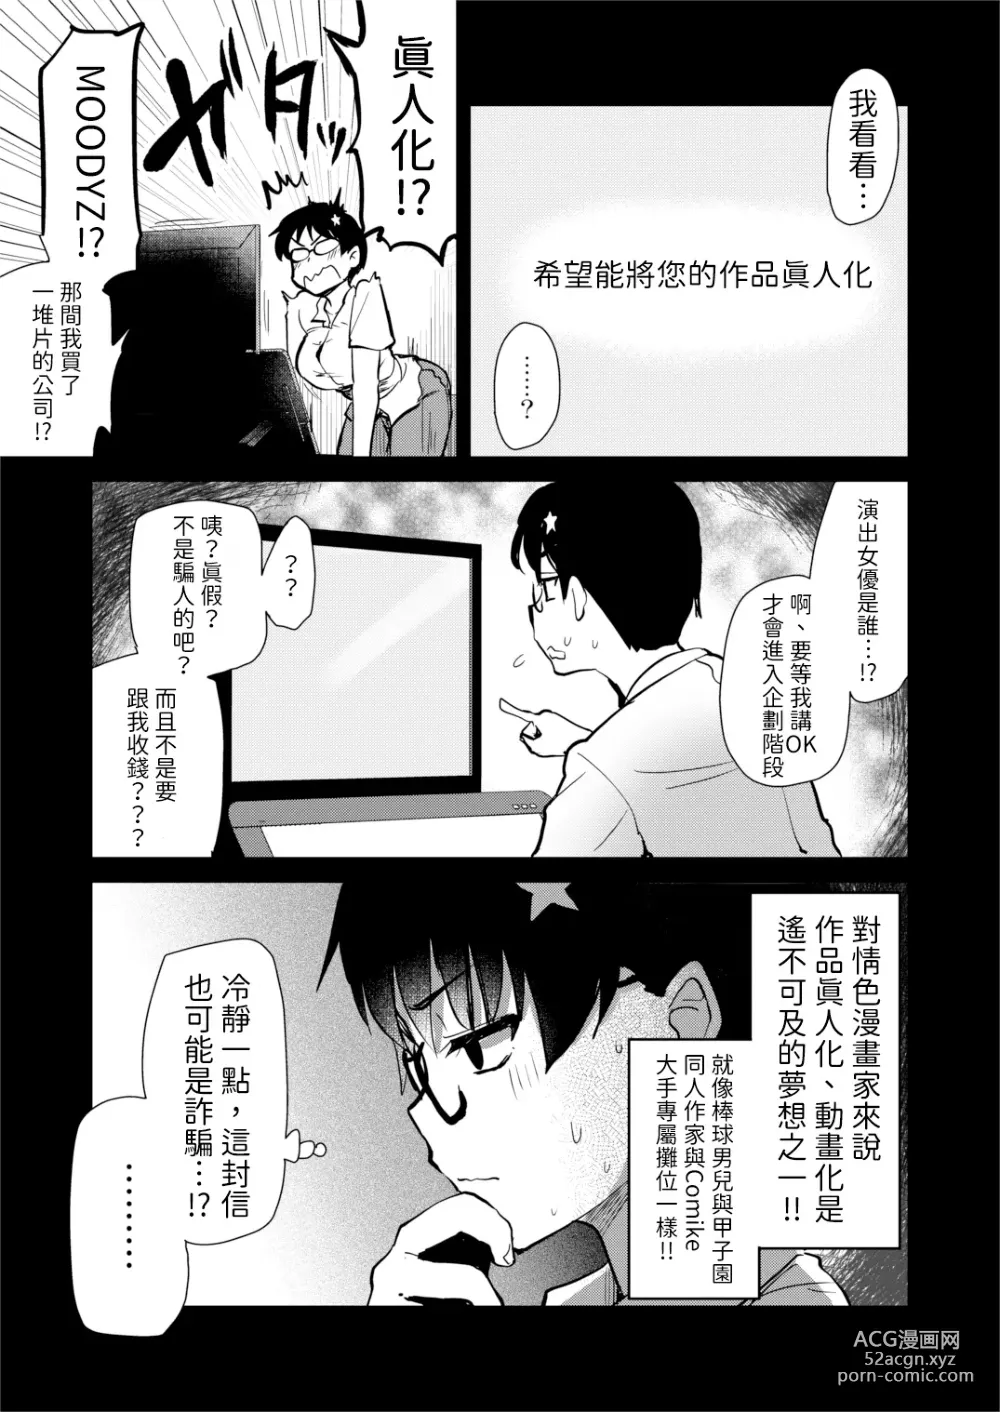 Page 7 of doujinshi 我畫的色情漫畫被AV真人化了!? 因為機會難得所以去拍攝現場觀摩之後的心得感想